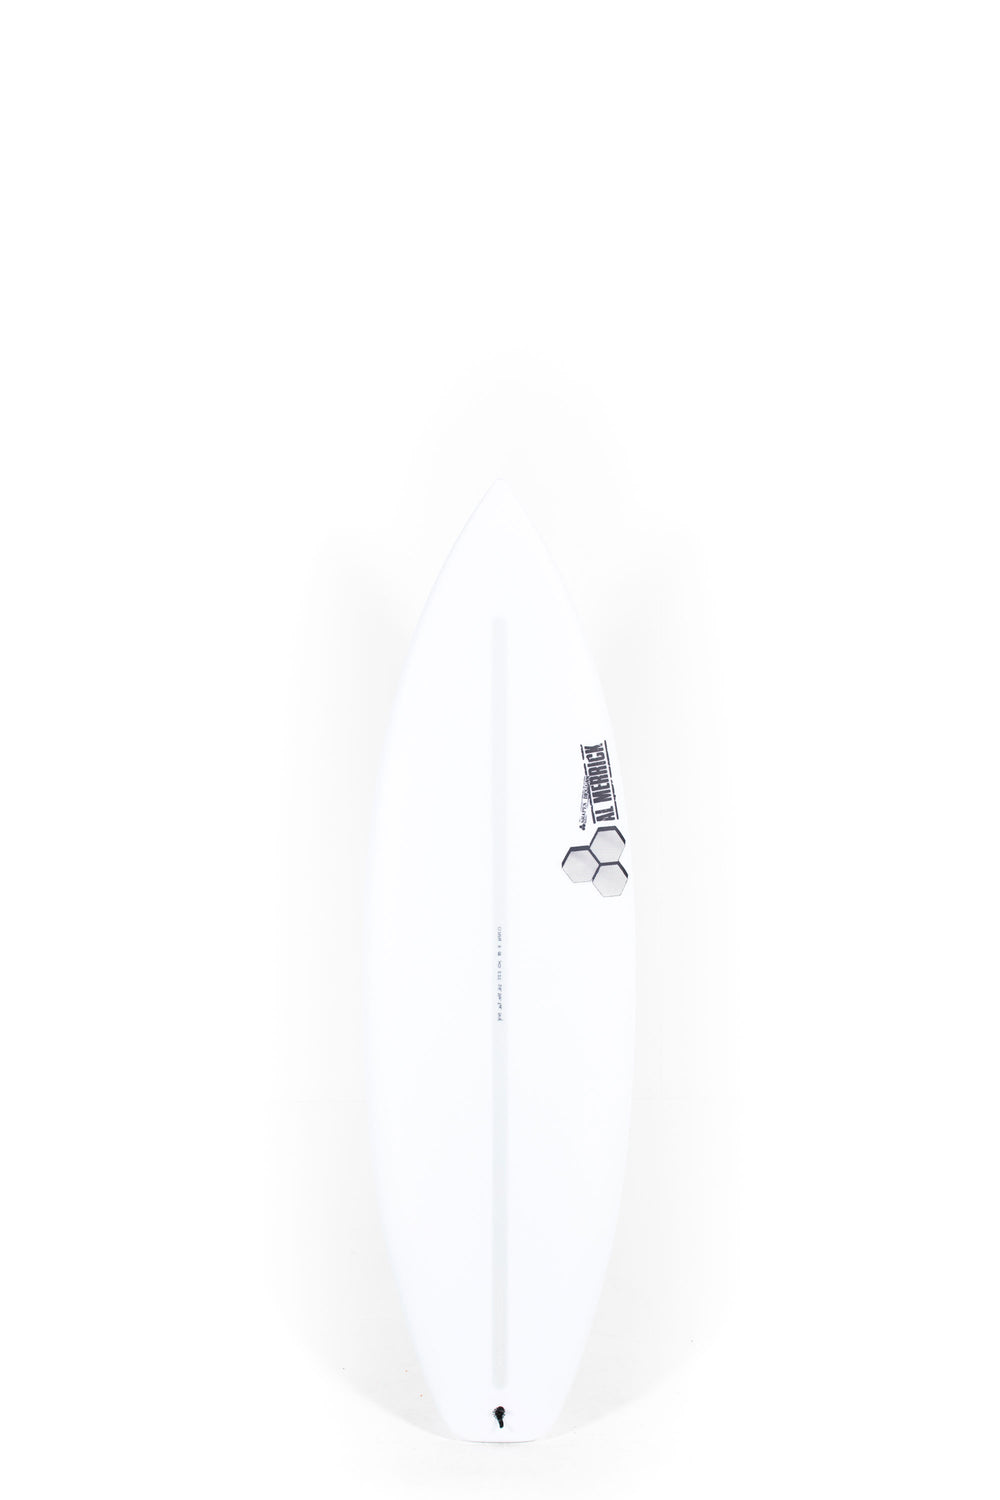 Pukas Surf Shop - Channel Islands - DUMPSTER DIVER 2 Spine Tek by Britt Merrick -  5'11